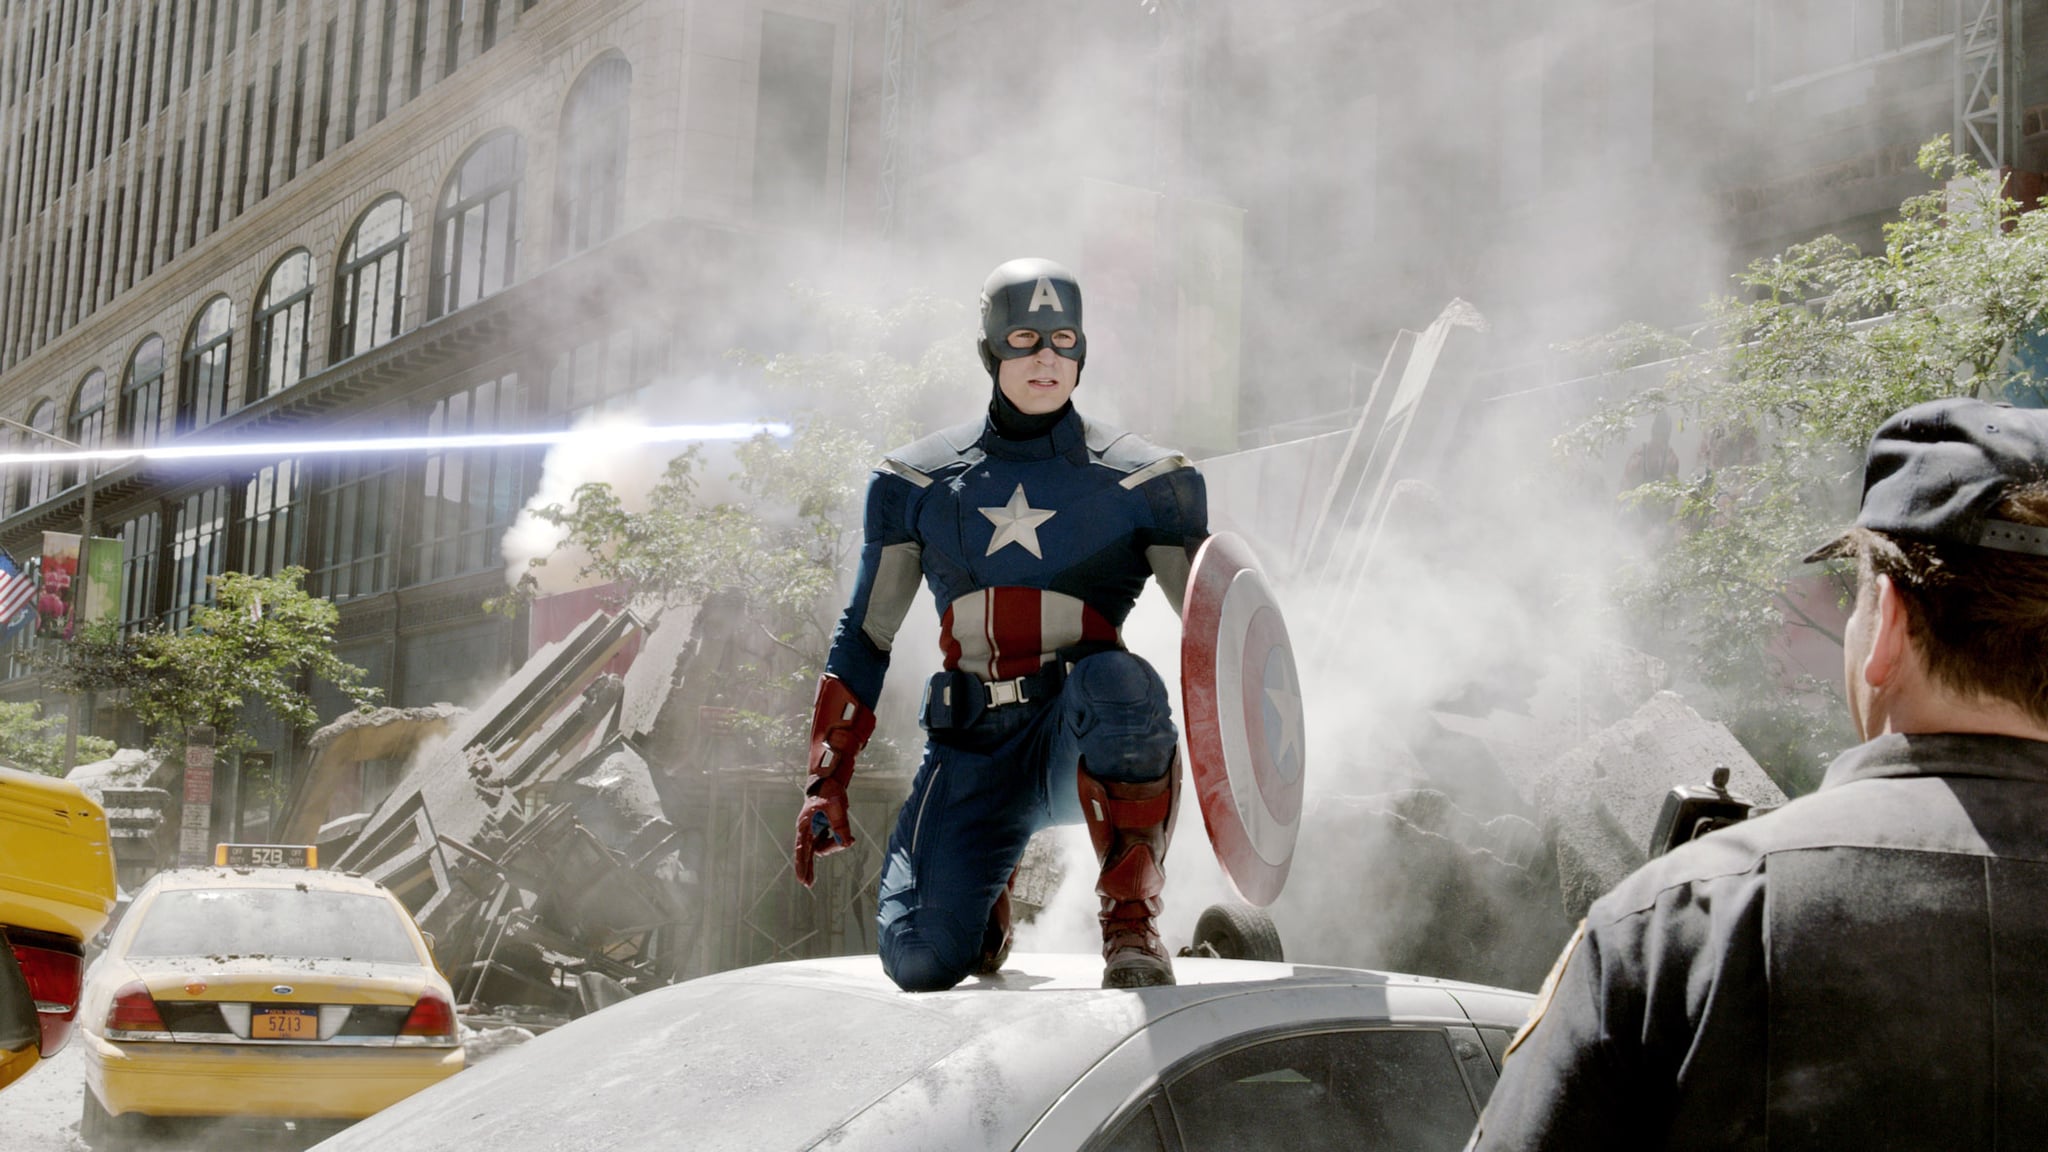 Avengers Cartoon Captain America Character Pose Poster | Zazzle